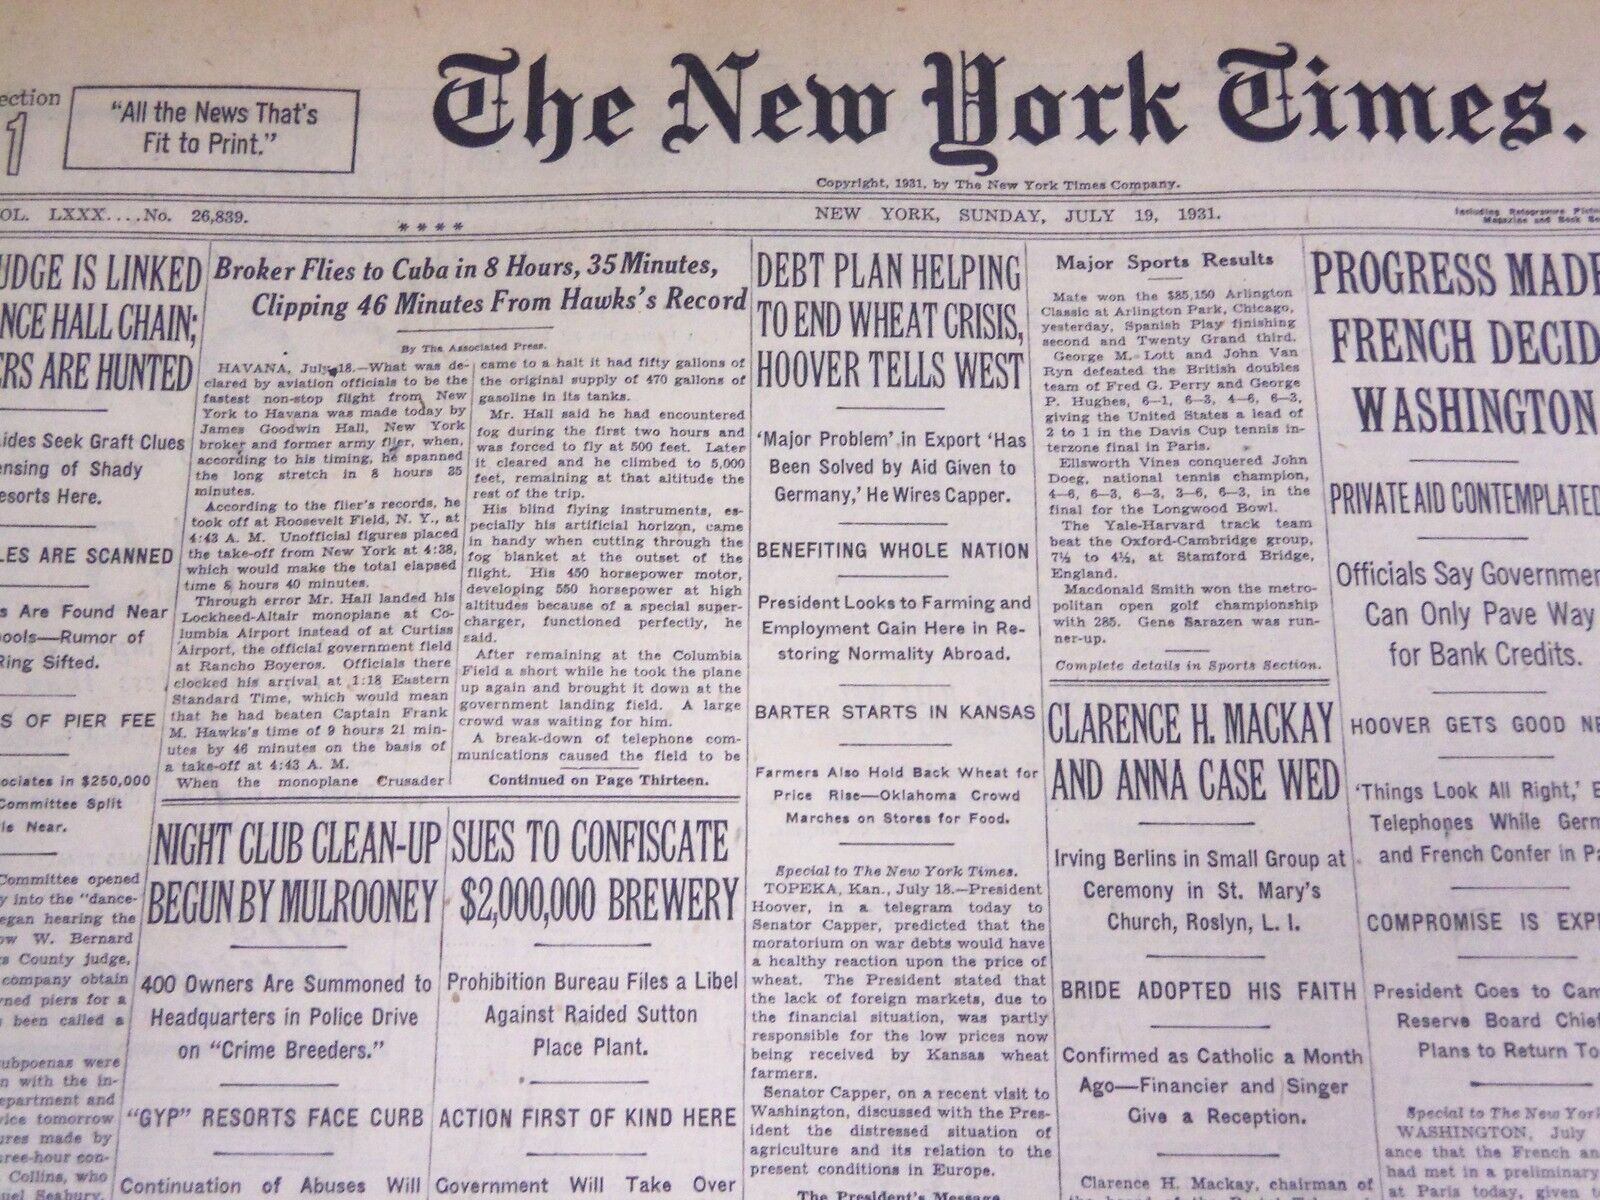 1931 JULY 19 NEW YORK TIMES - BROKER FLIES TO CUBA IN 8 HOURS, 35 MINS - NT 2199